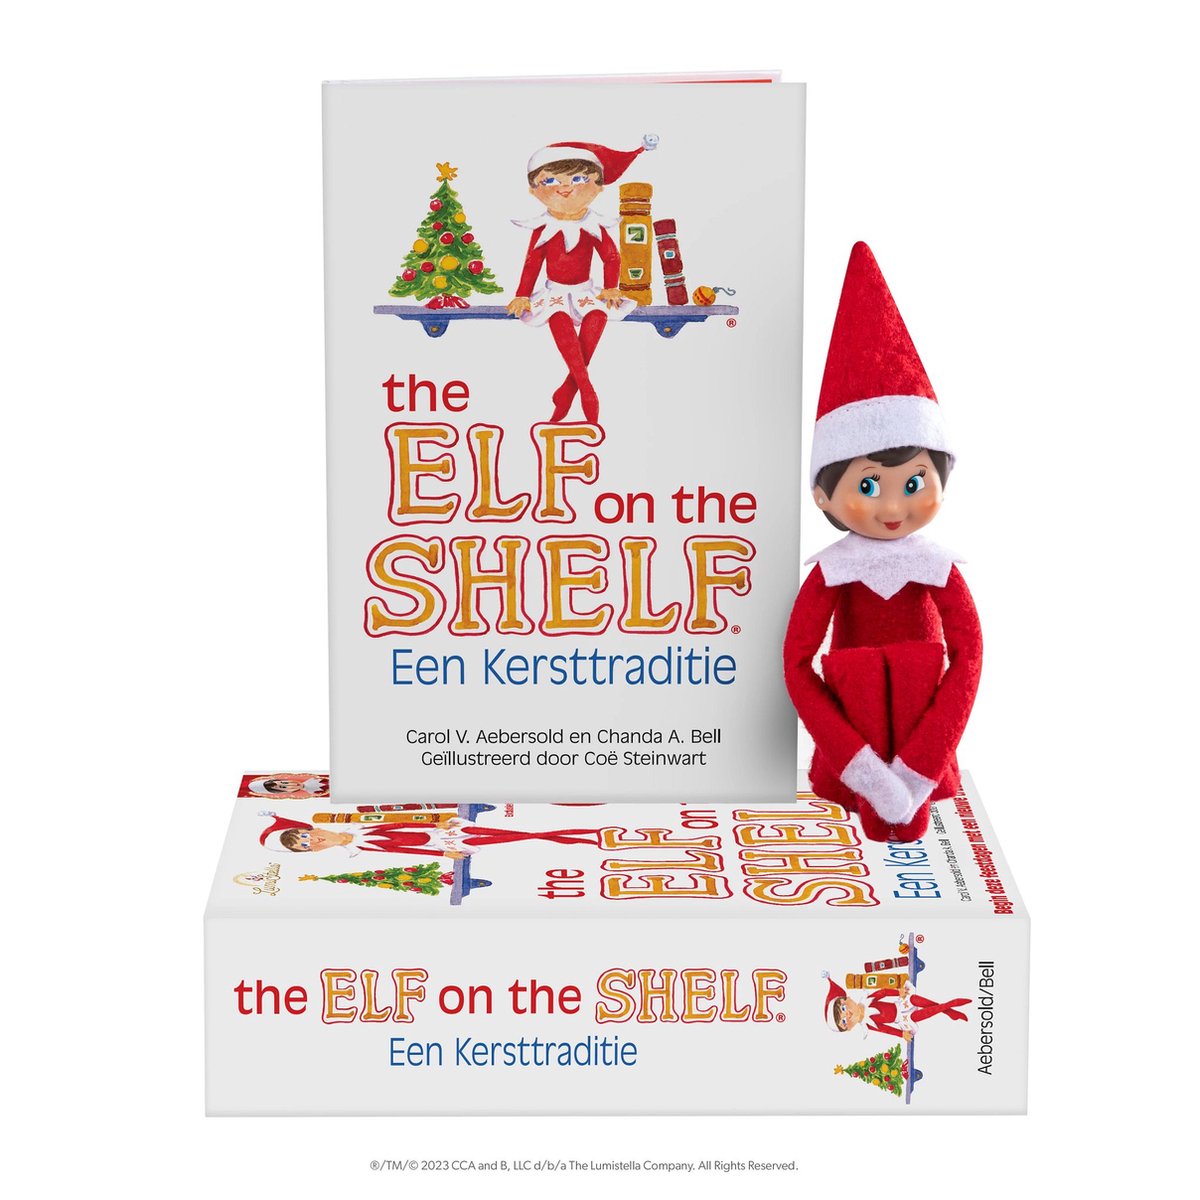 The Elf on the shelf